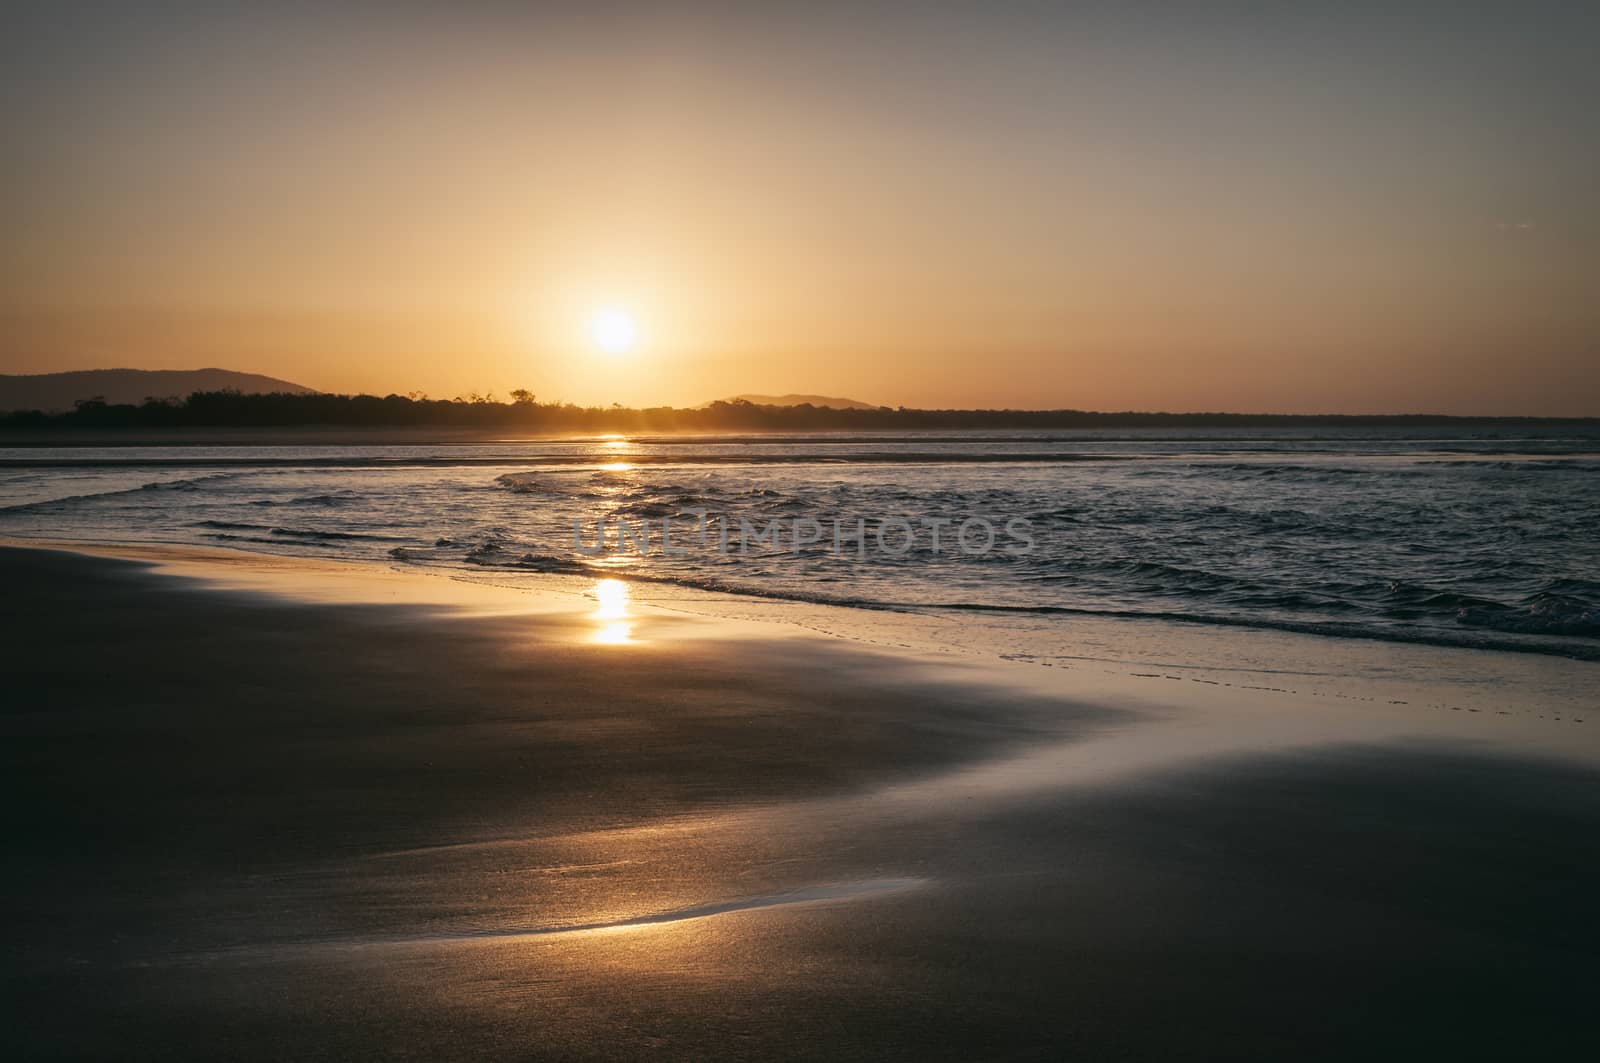 Beach at the East Coast of Queensland, Australia